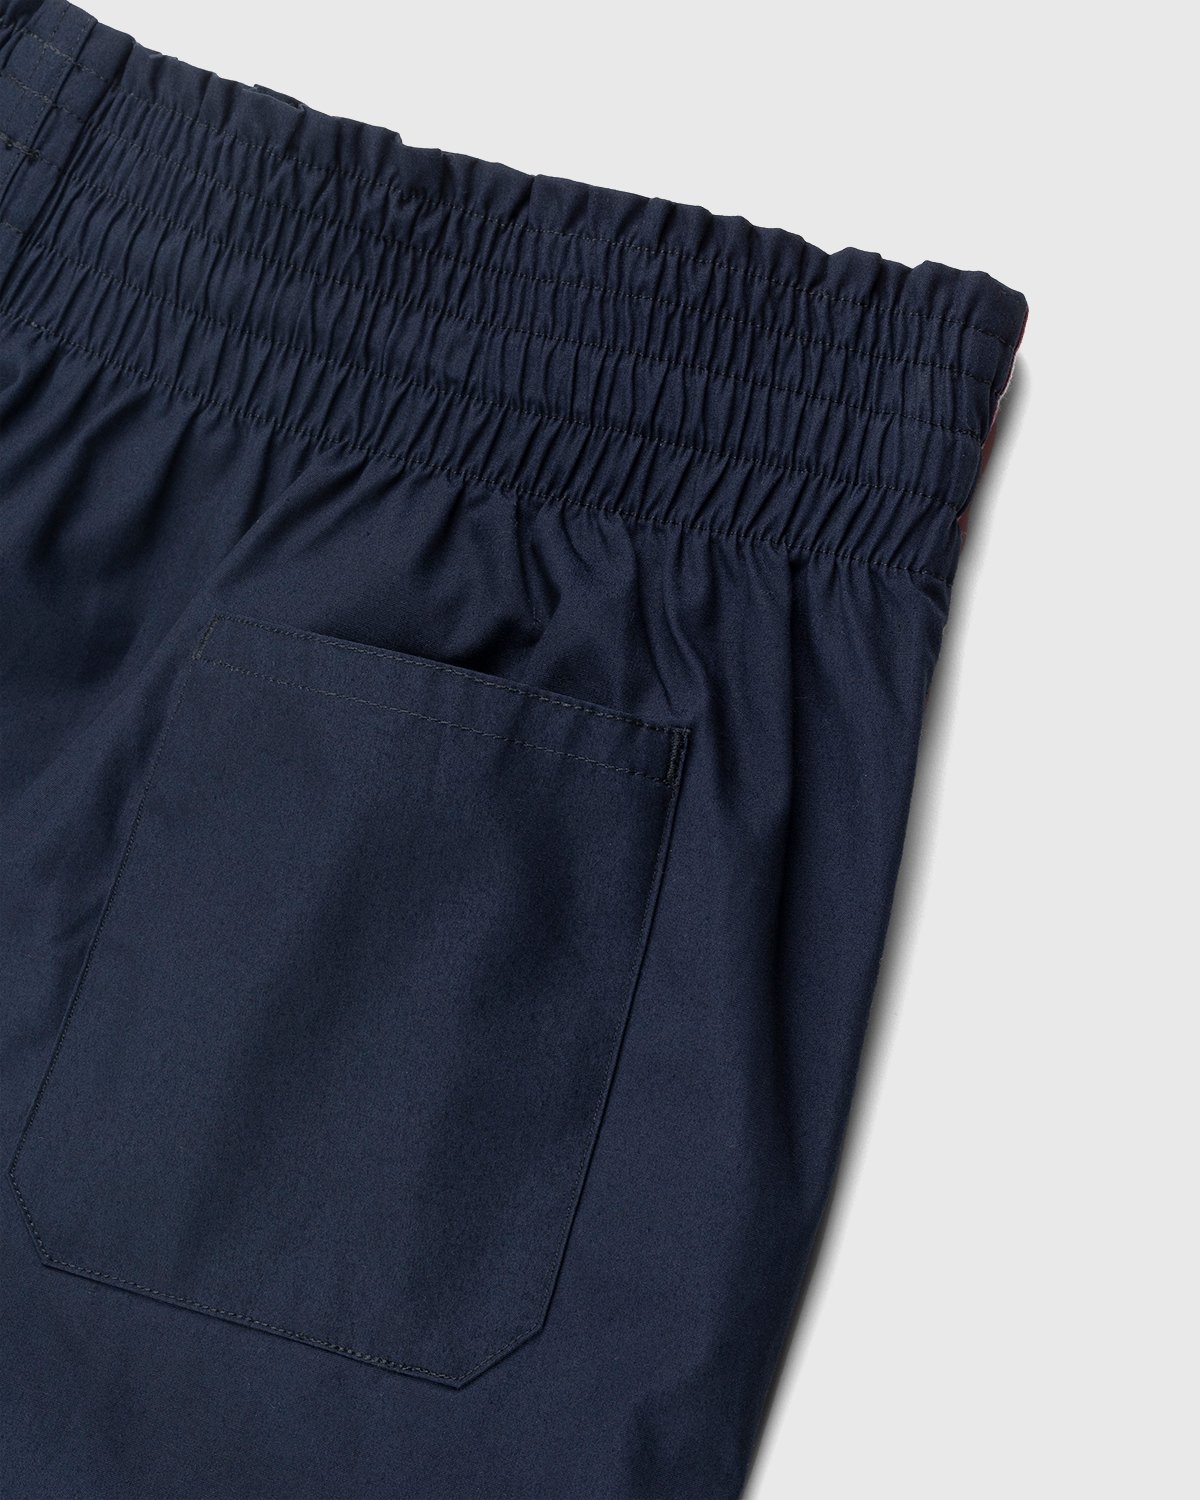 Acne Studios – Elastic Waist Contrast Shorts Navy - Shorts - Blue - Image 6